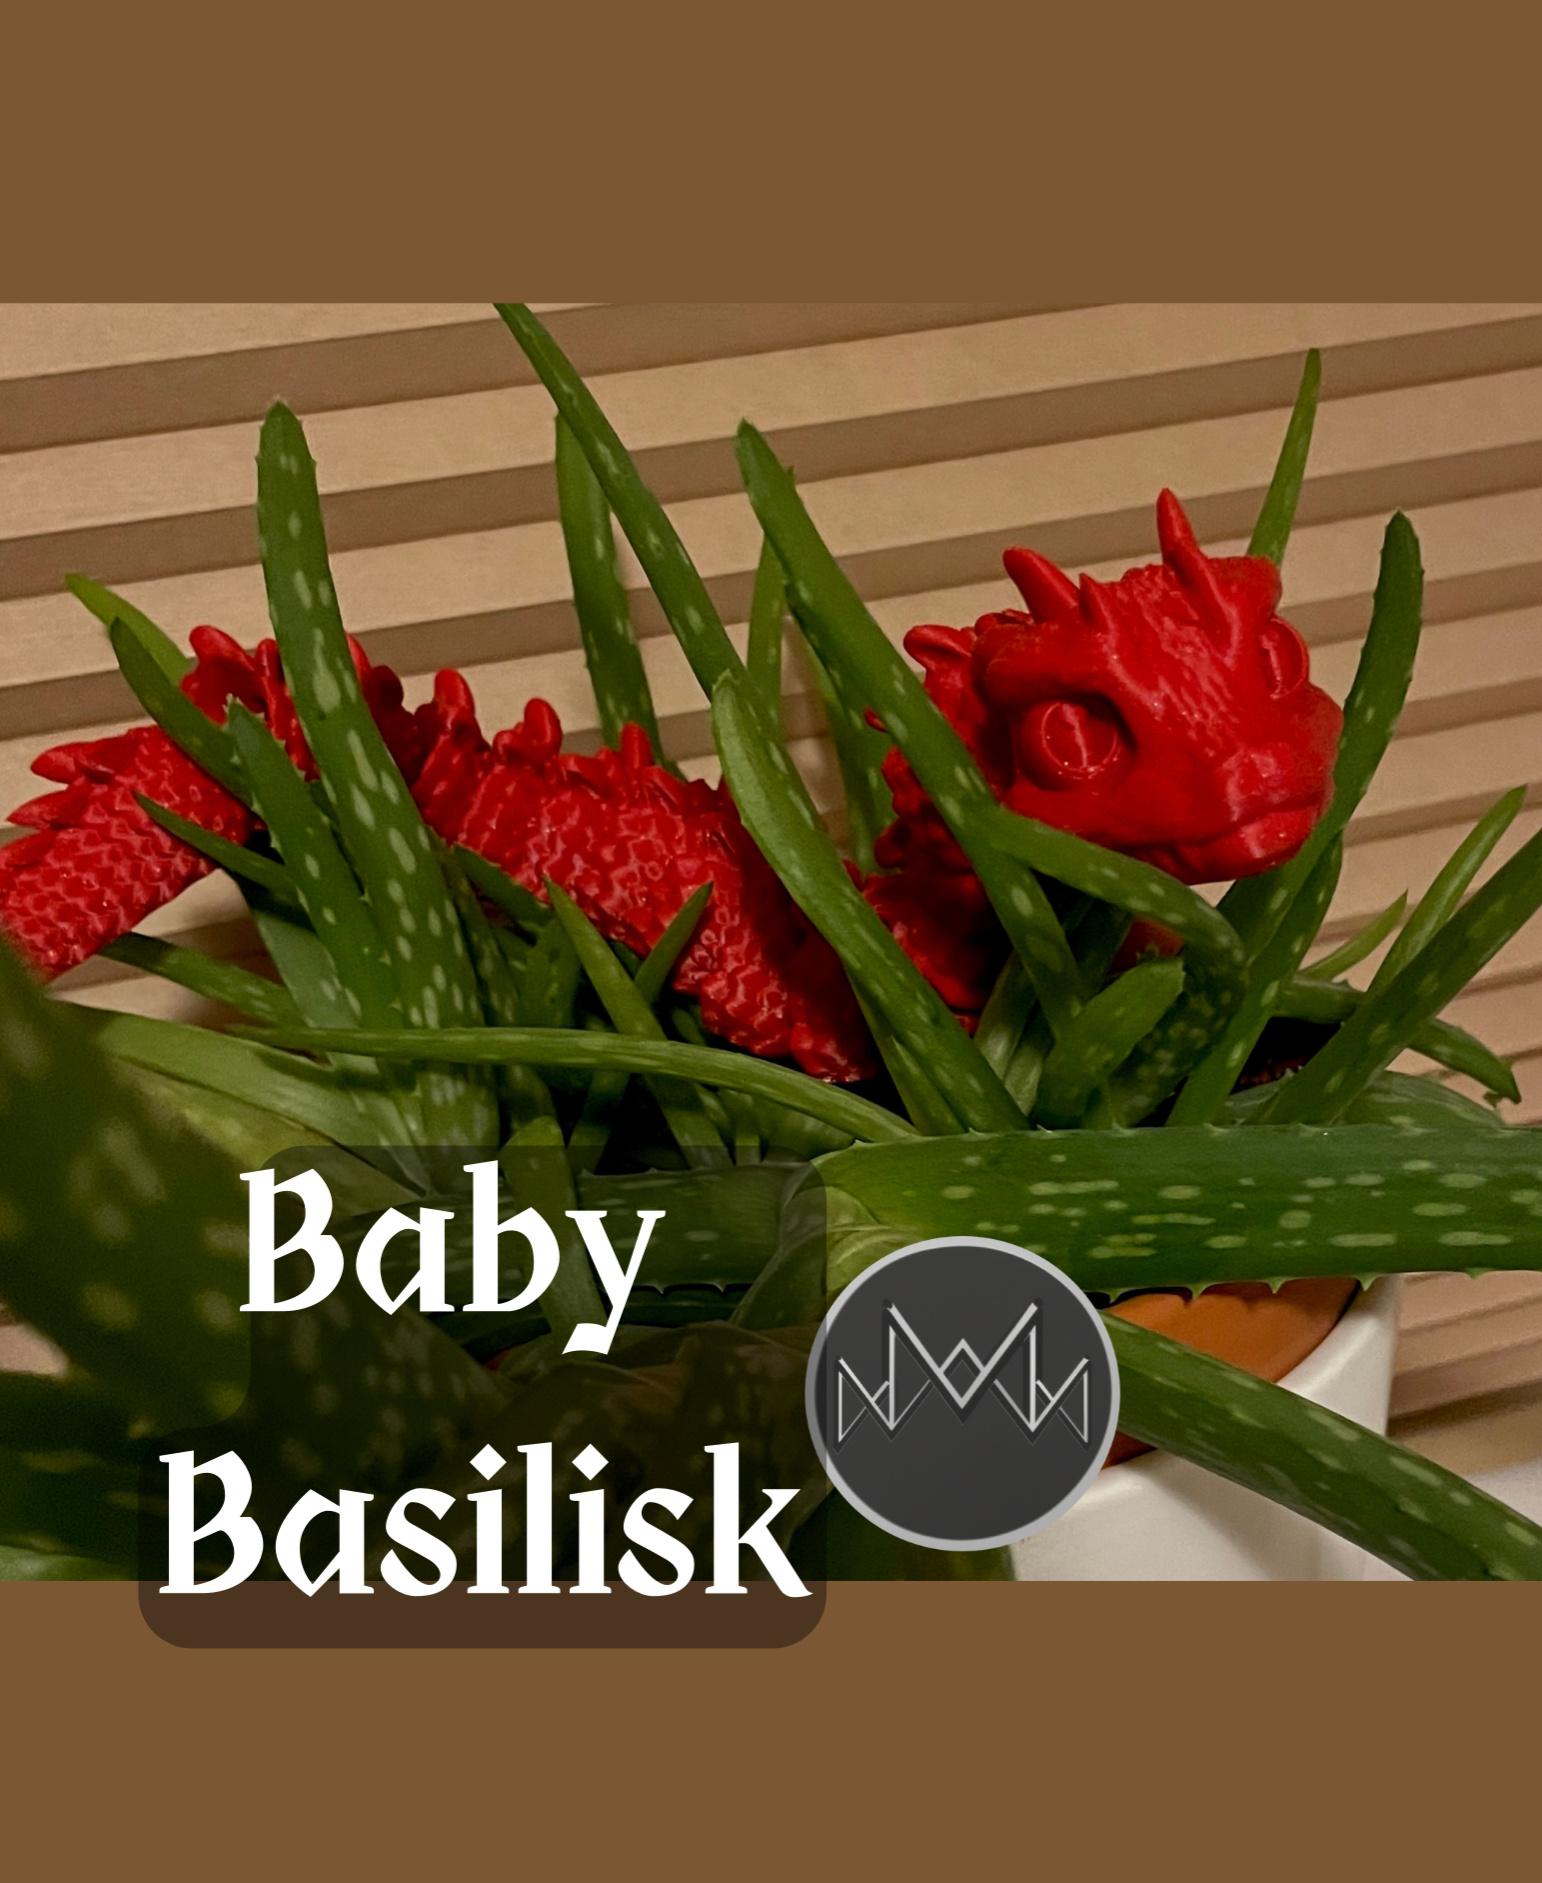 Baby Basilisk (Short) - Articulated Snap-Flex Fidget  - Polymaker Galaxy Red  - 3d model